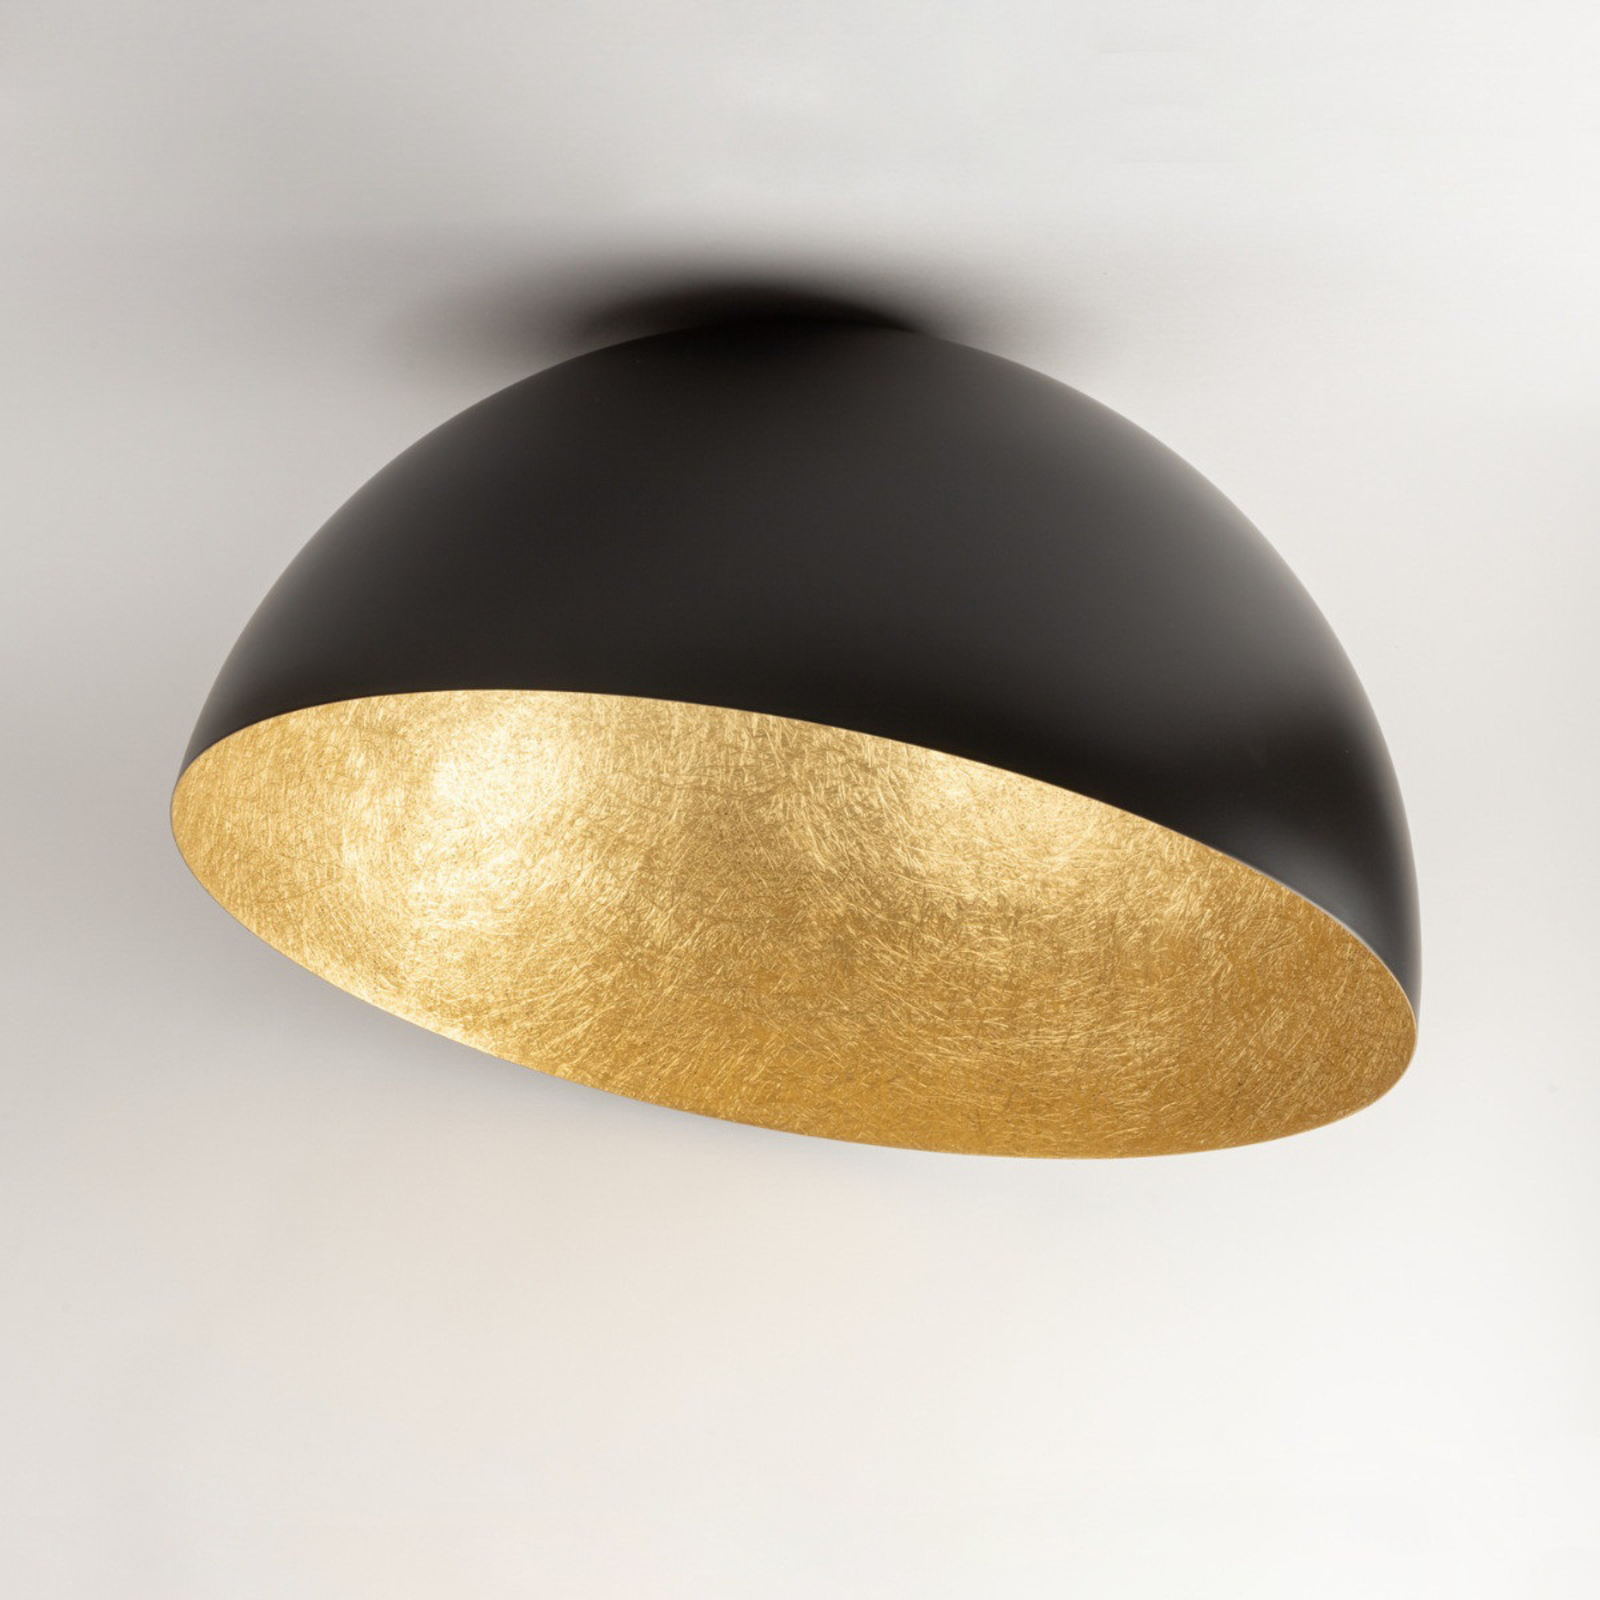 Sfera ceiling light, Ø 35 cm, black/gold